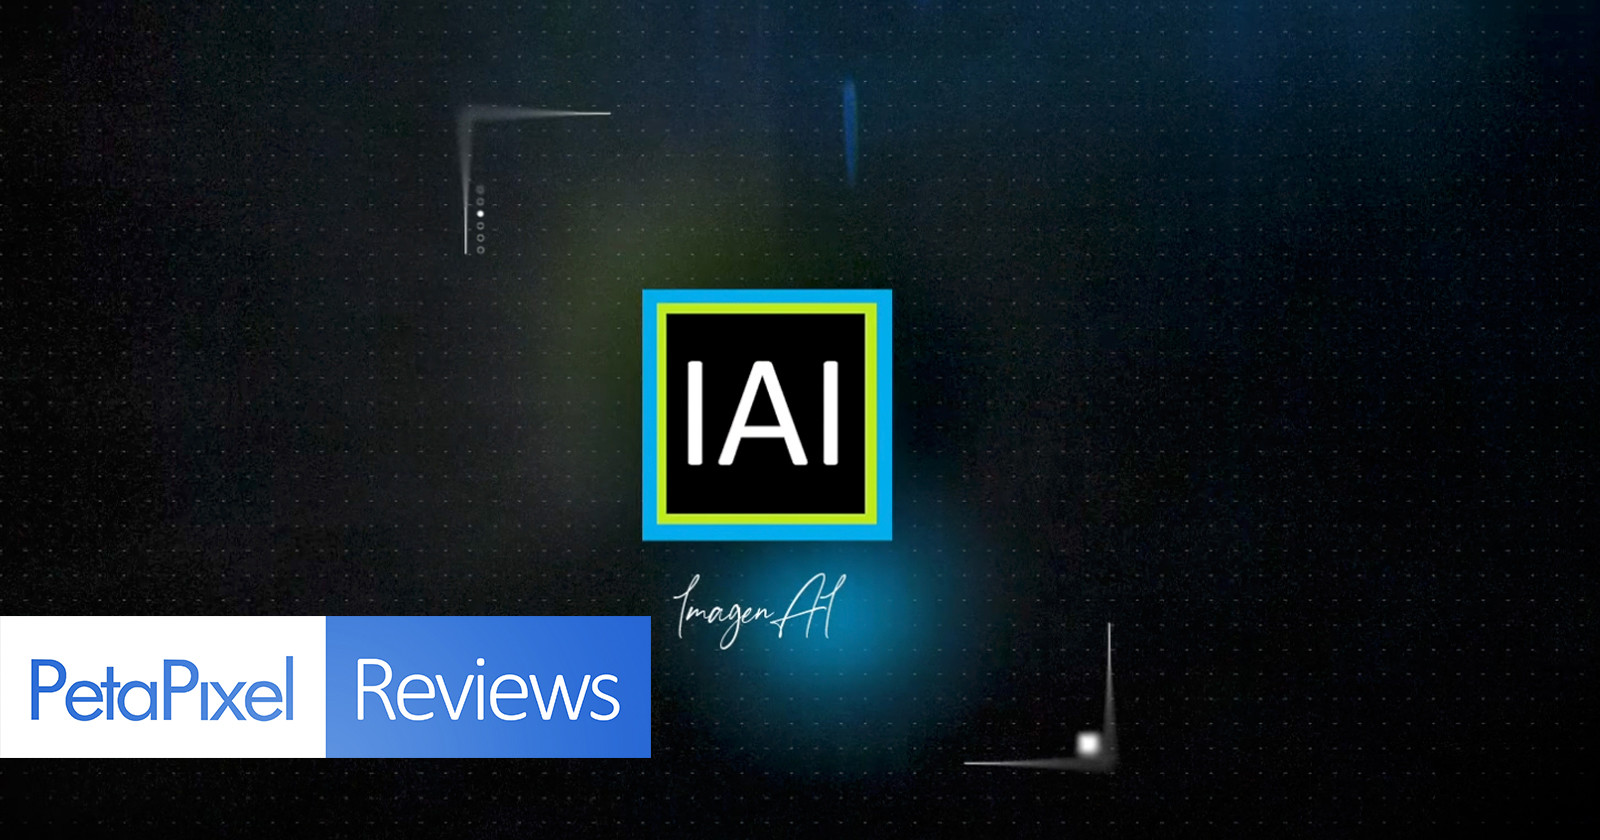 ImagenAI Review: Is Bulk Artificial Intelligence Editing Finally Here?